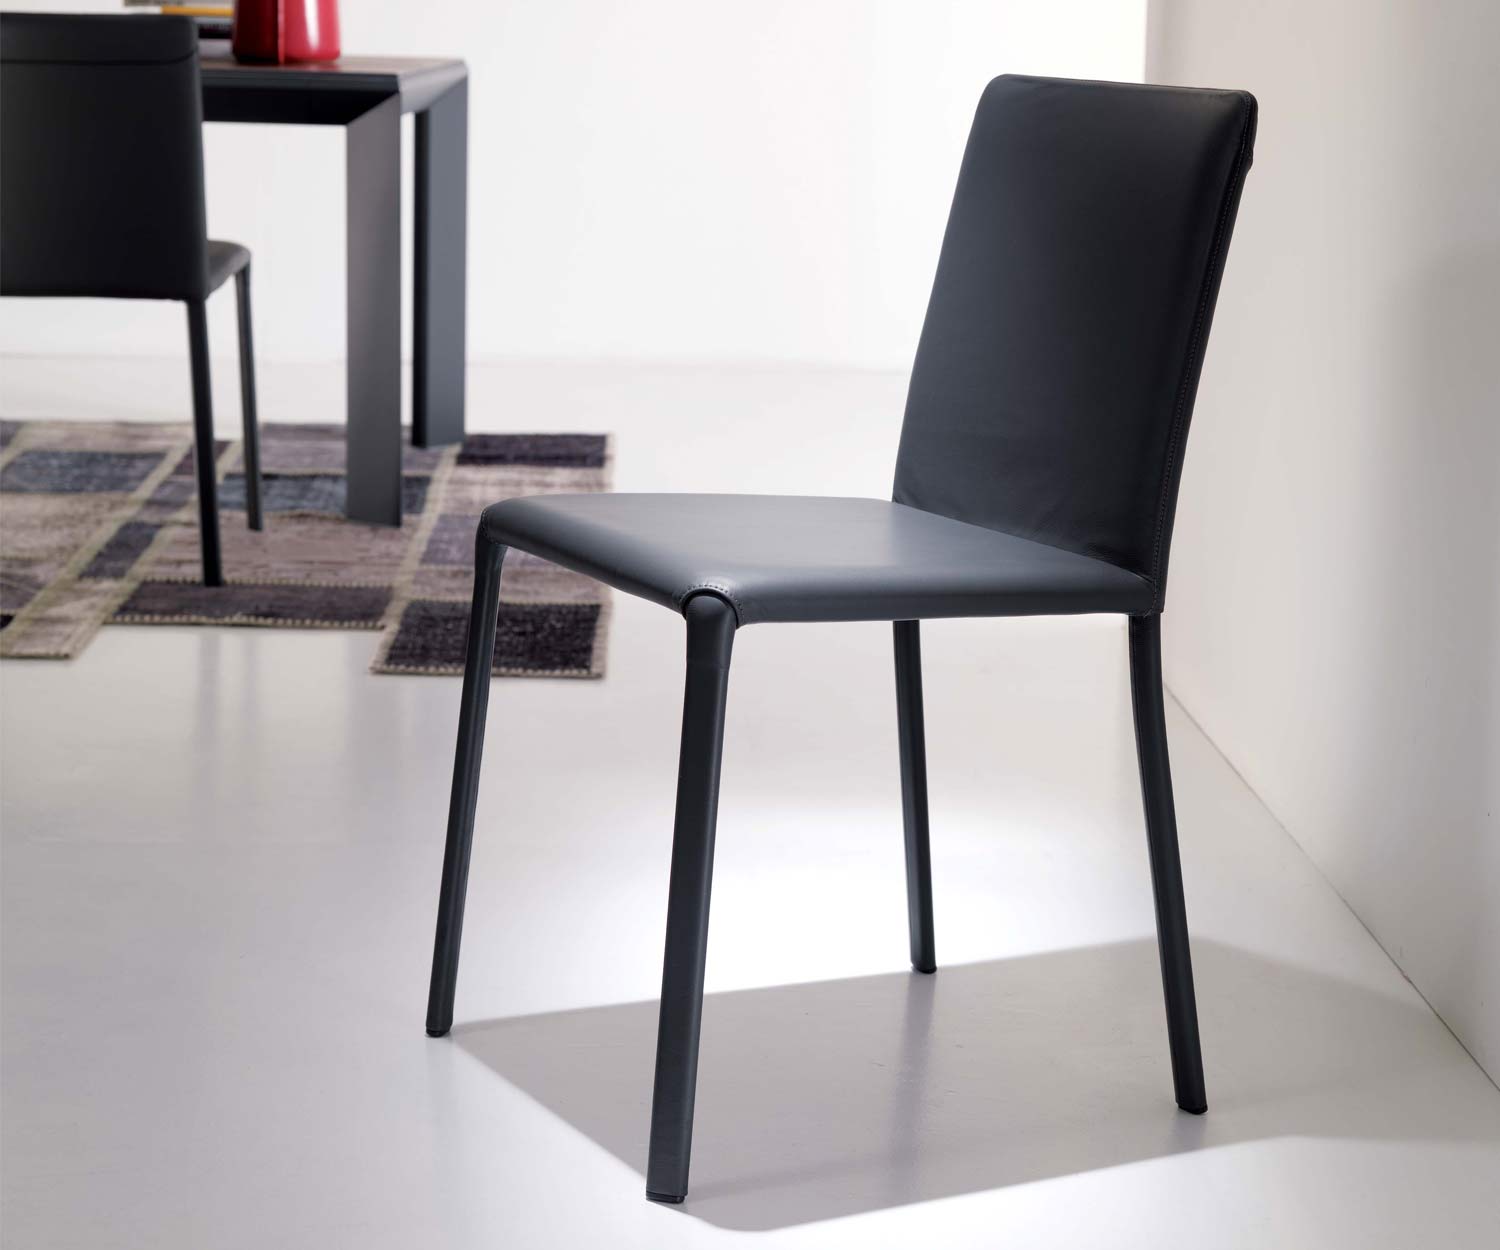 Ozzio Design chair Lunette leather dark grey